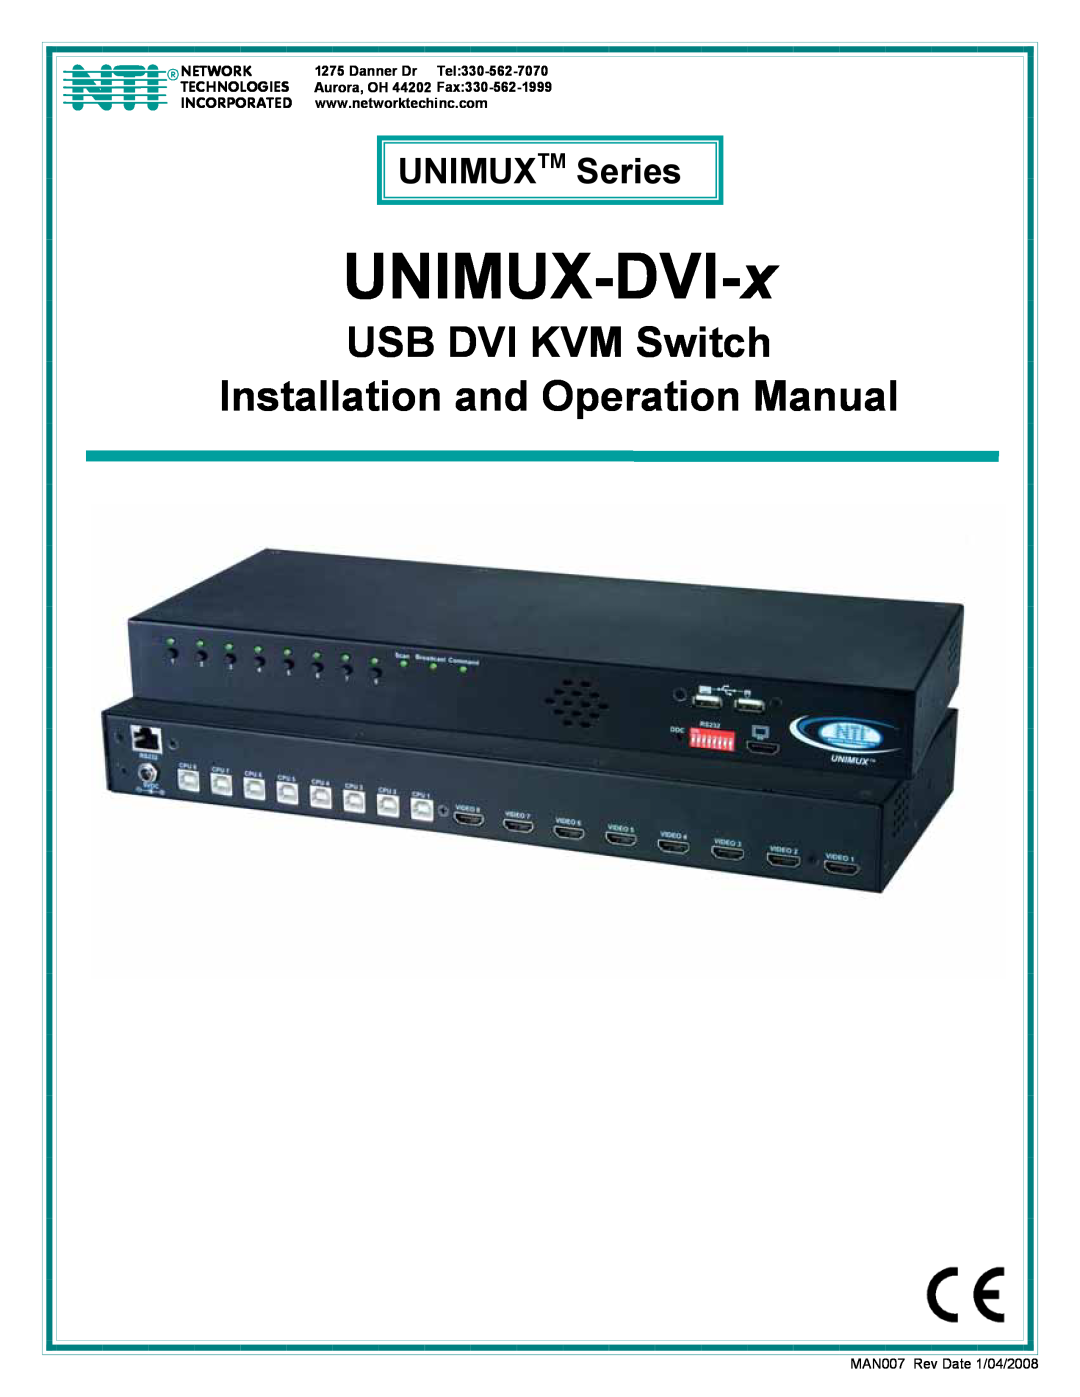 Network Technologies UNIMUX-DVI-x operation manual UNIMUXTM Series, USB DVI KVM Switch, Danner Dr Tel330-562-7070 